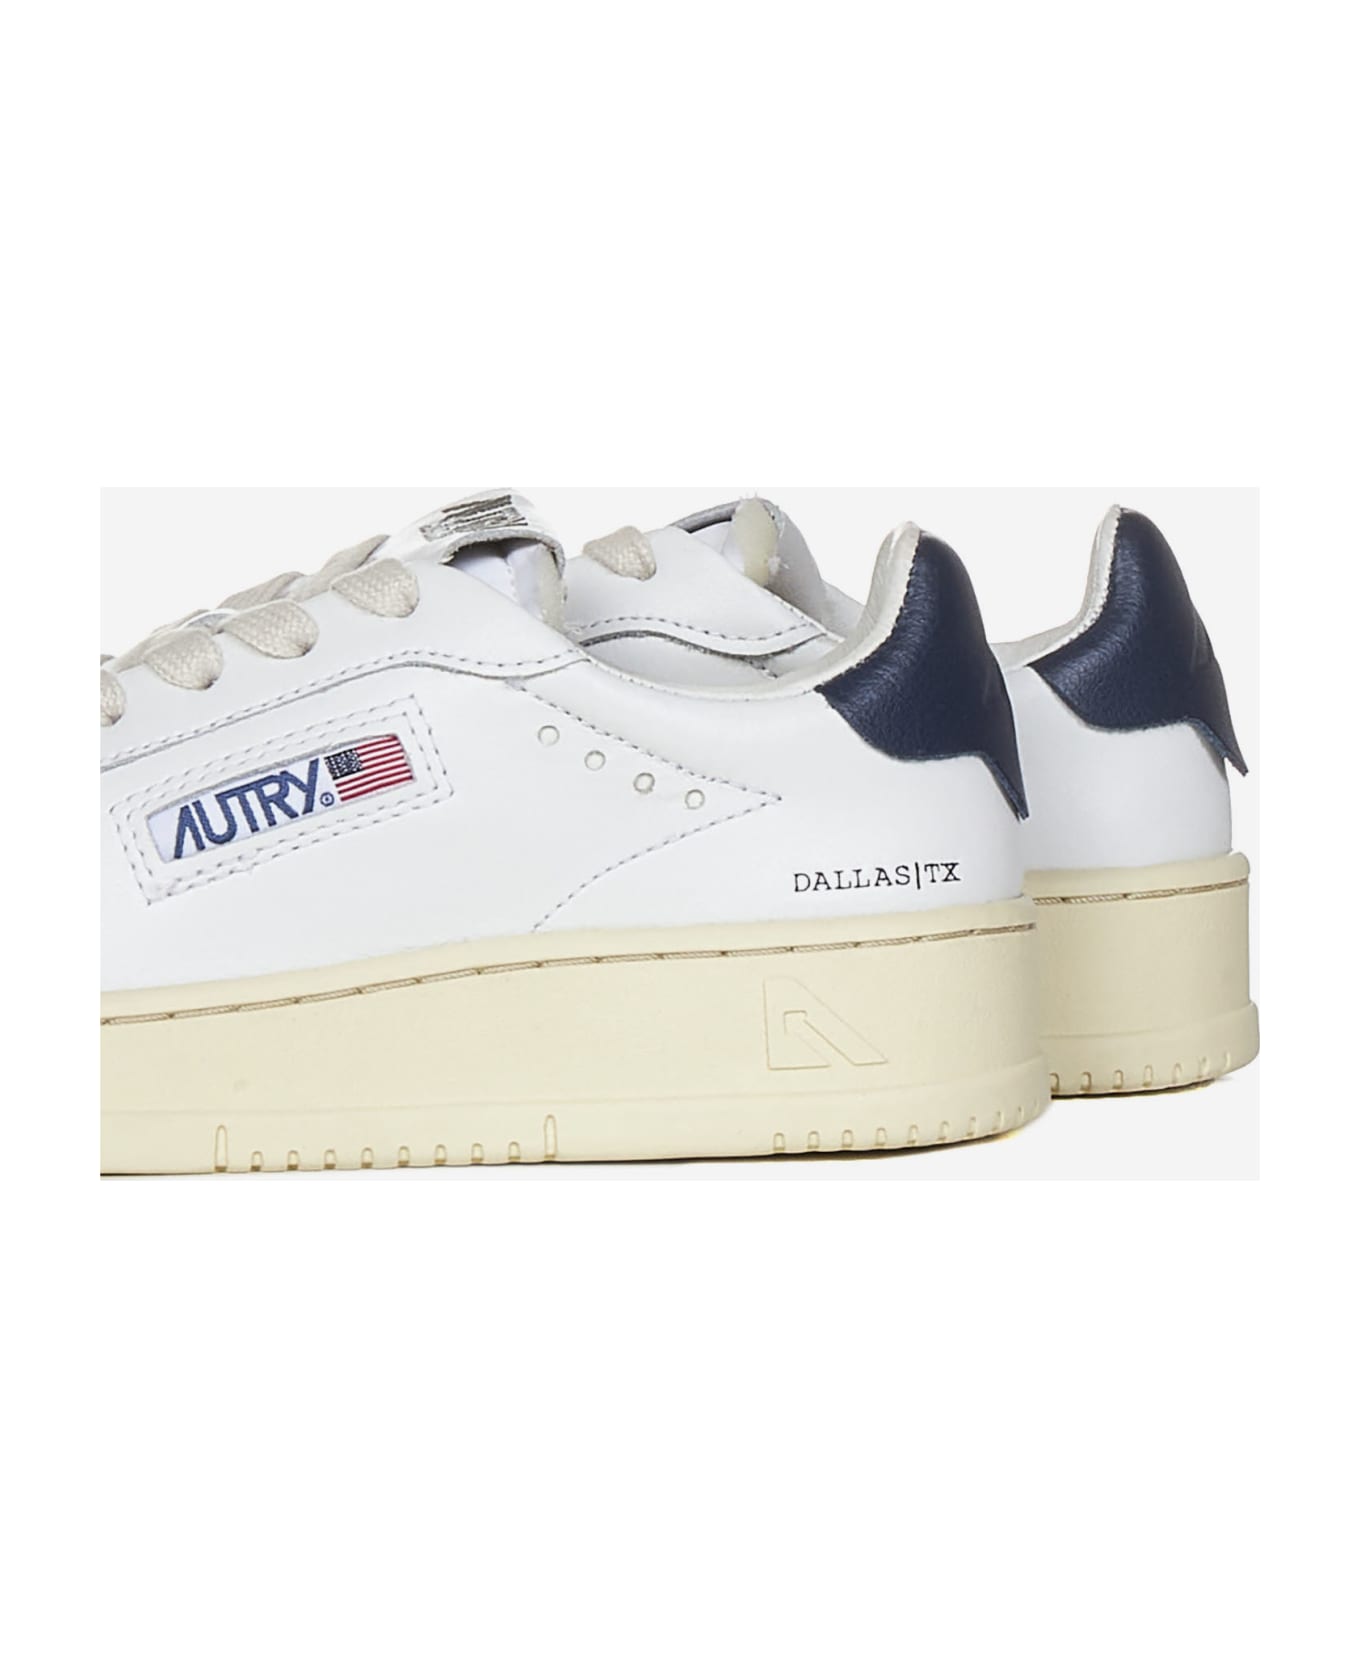 Autry Dallas Low Sneakers - WHITE シューズ